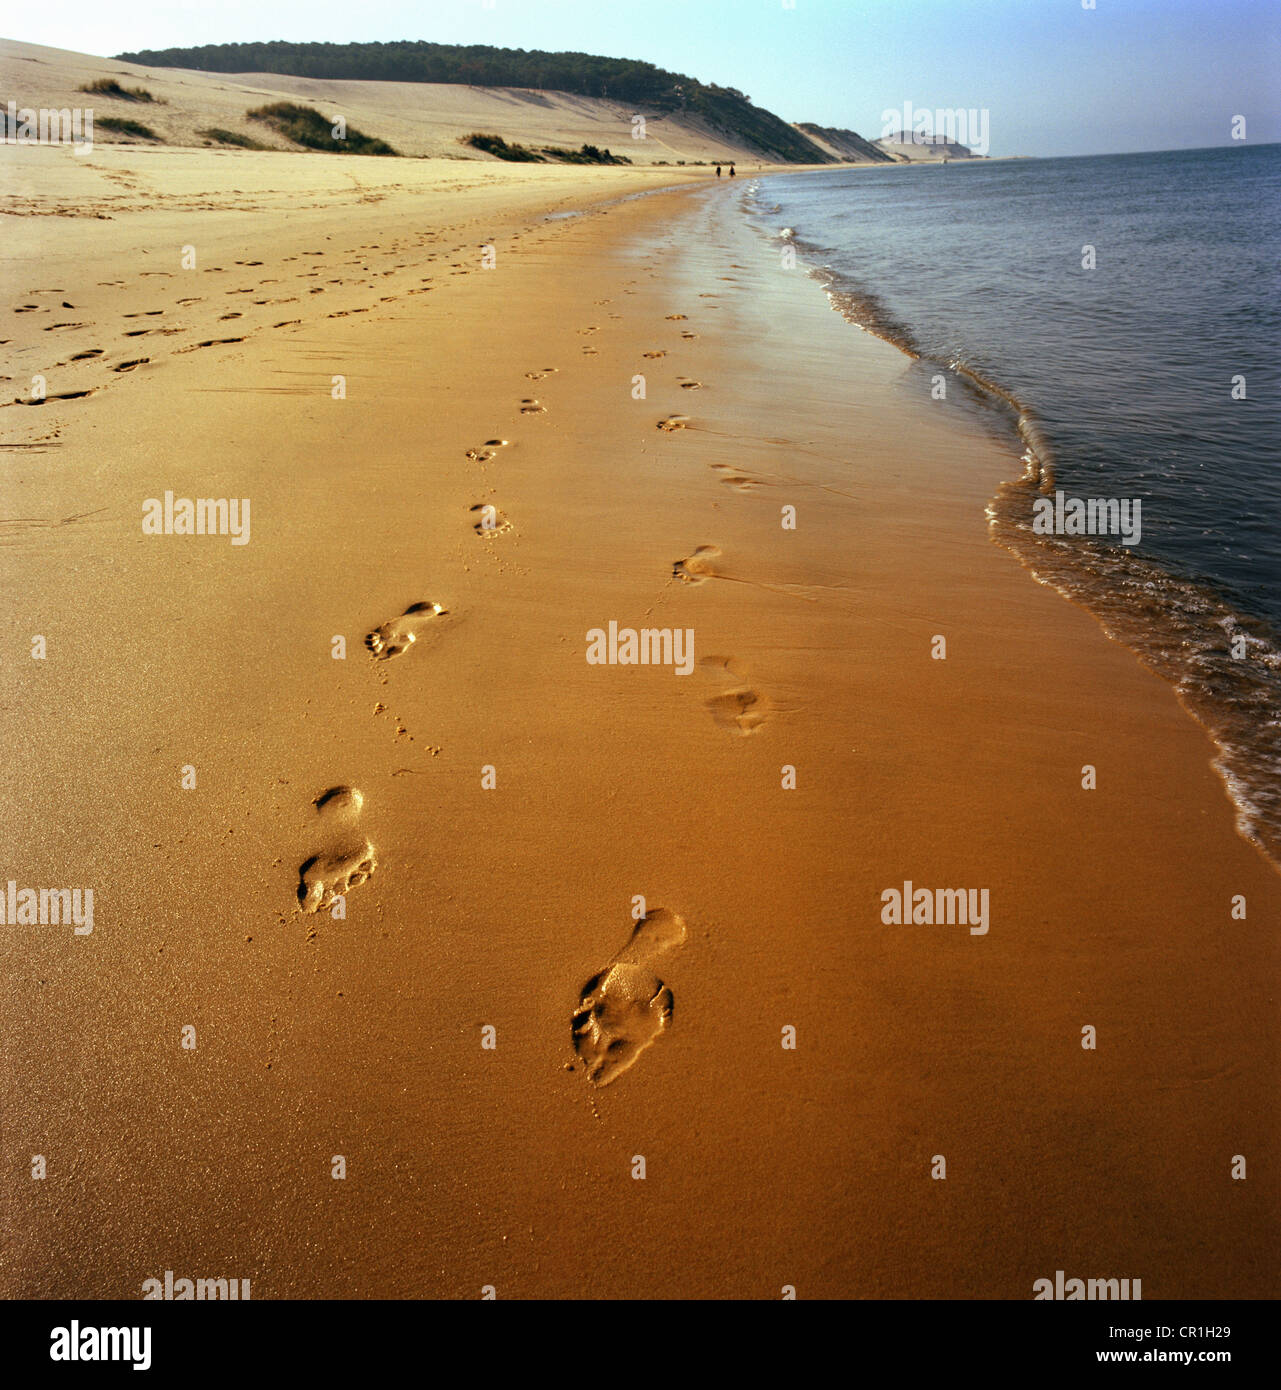 Footprints in sand on beach Stock Photo